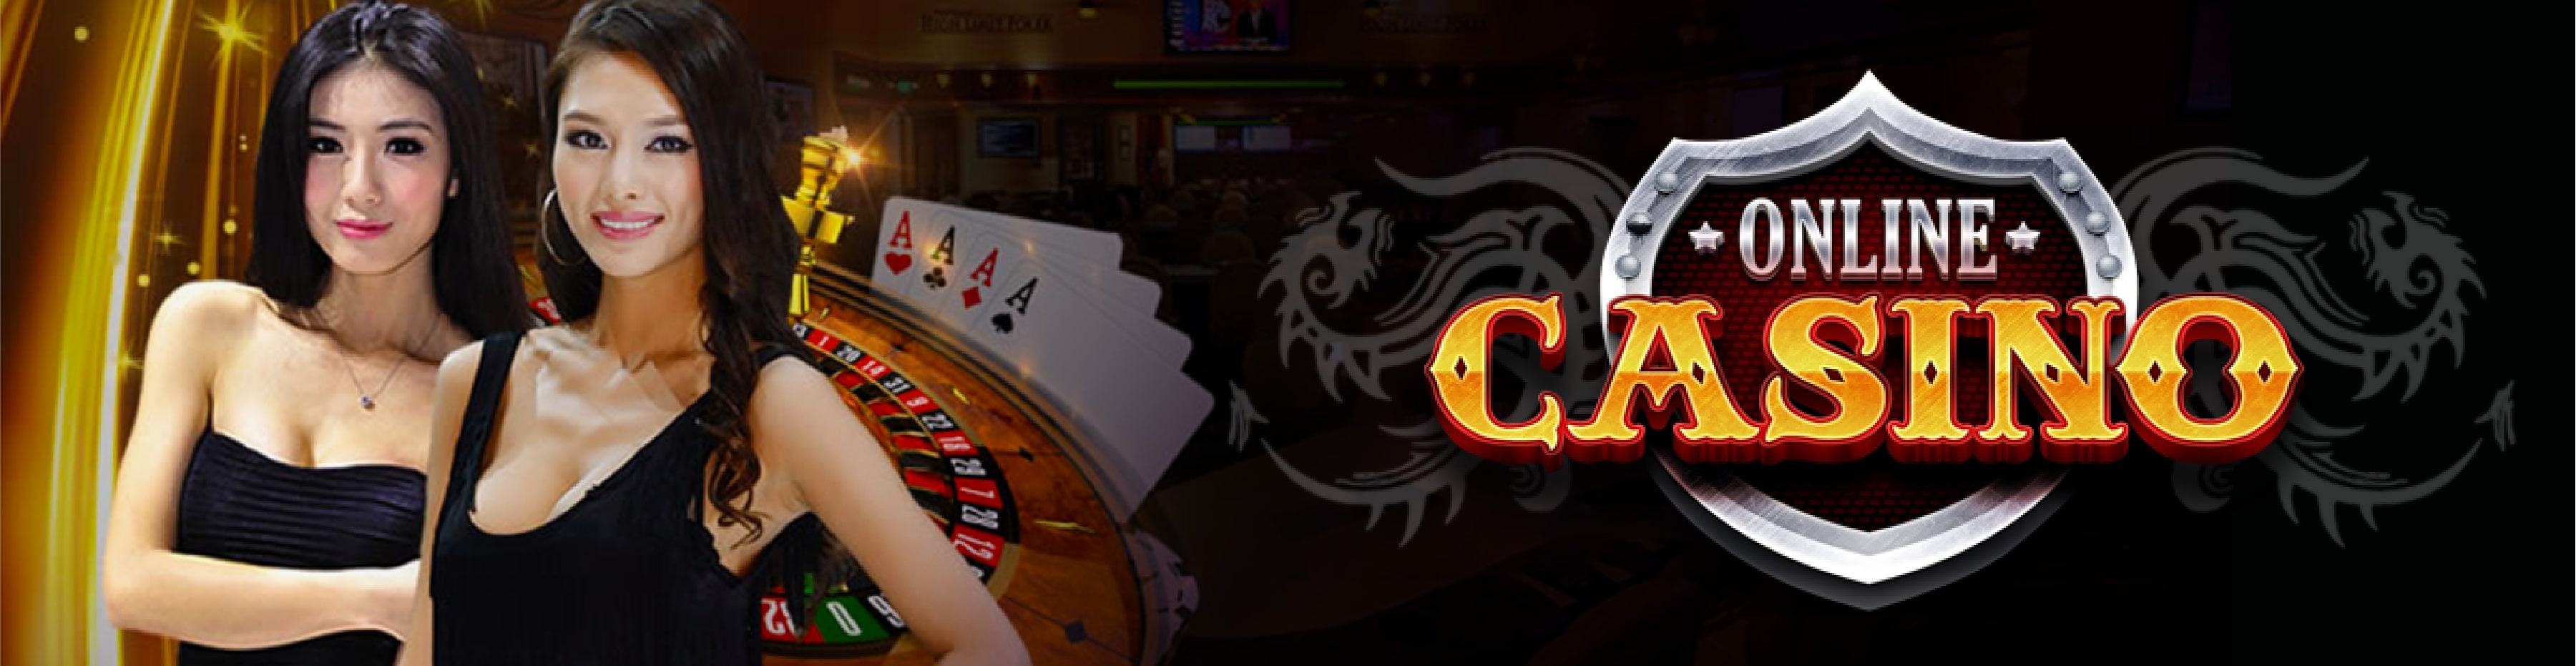 online-casino-singapore.png